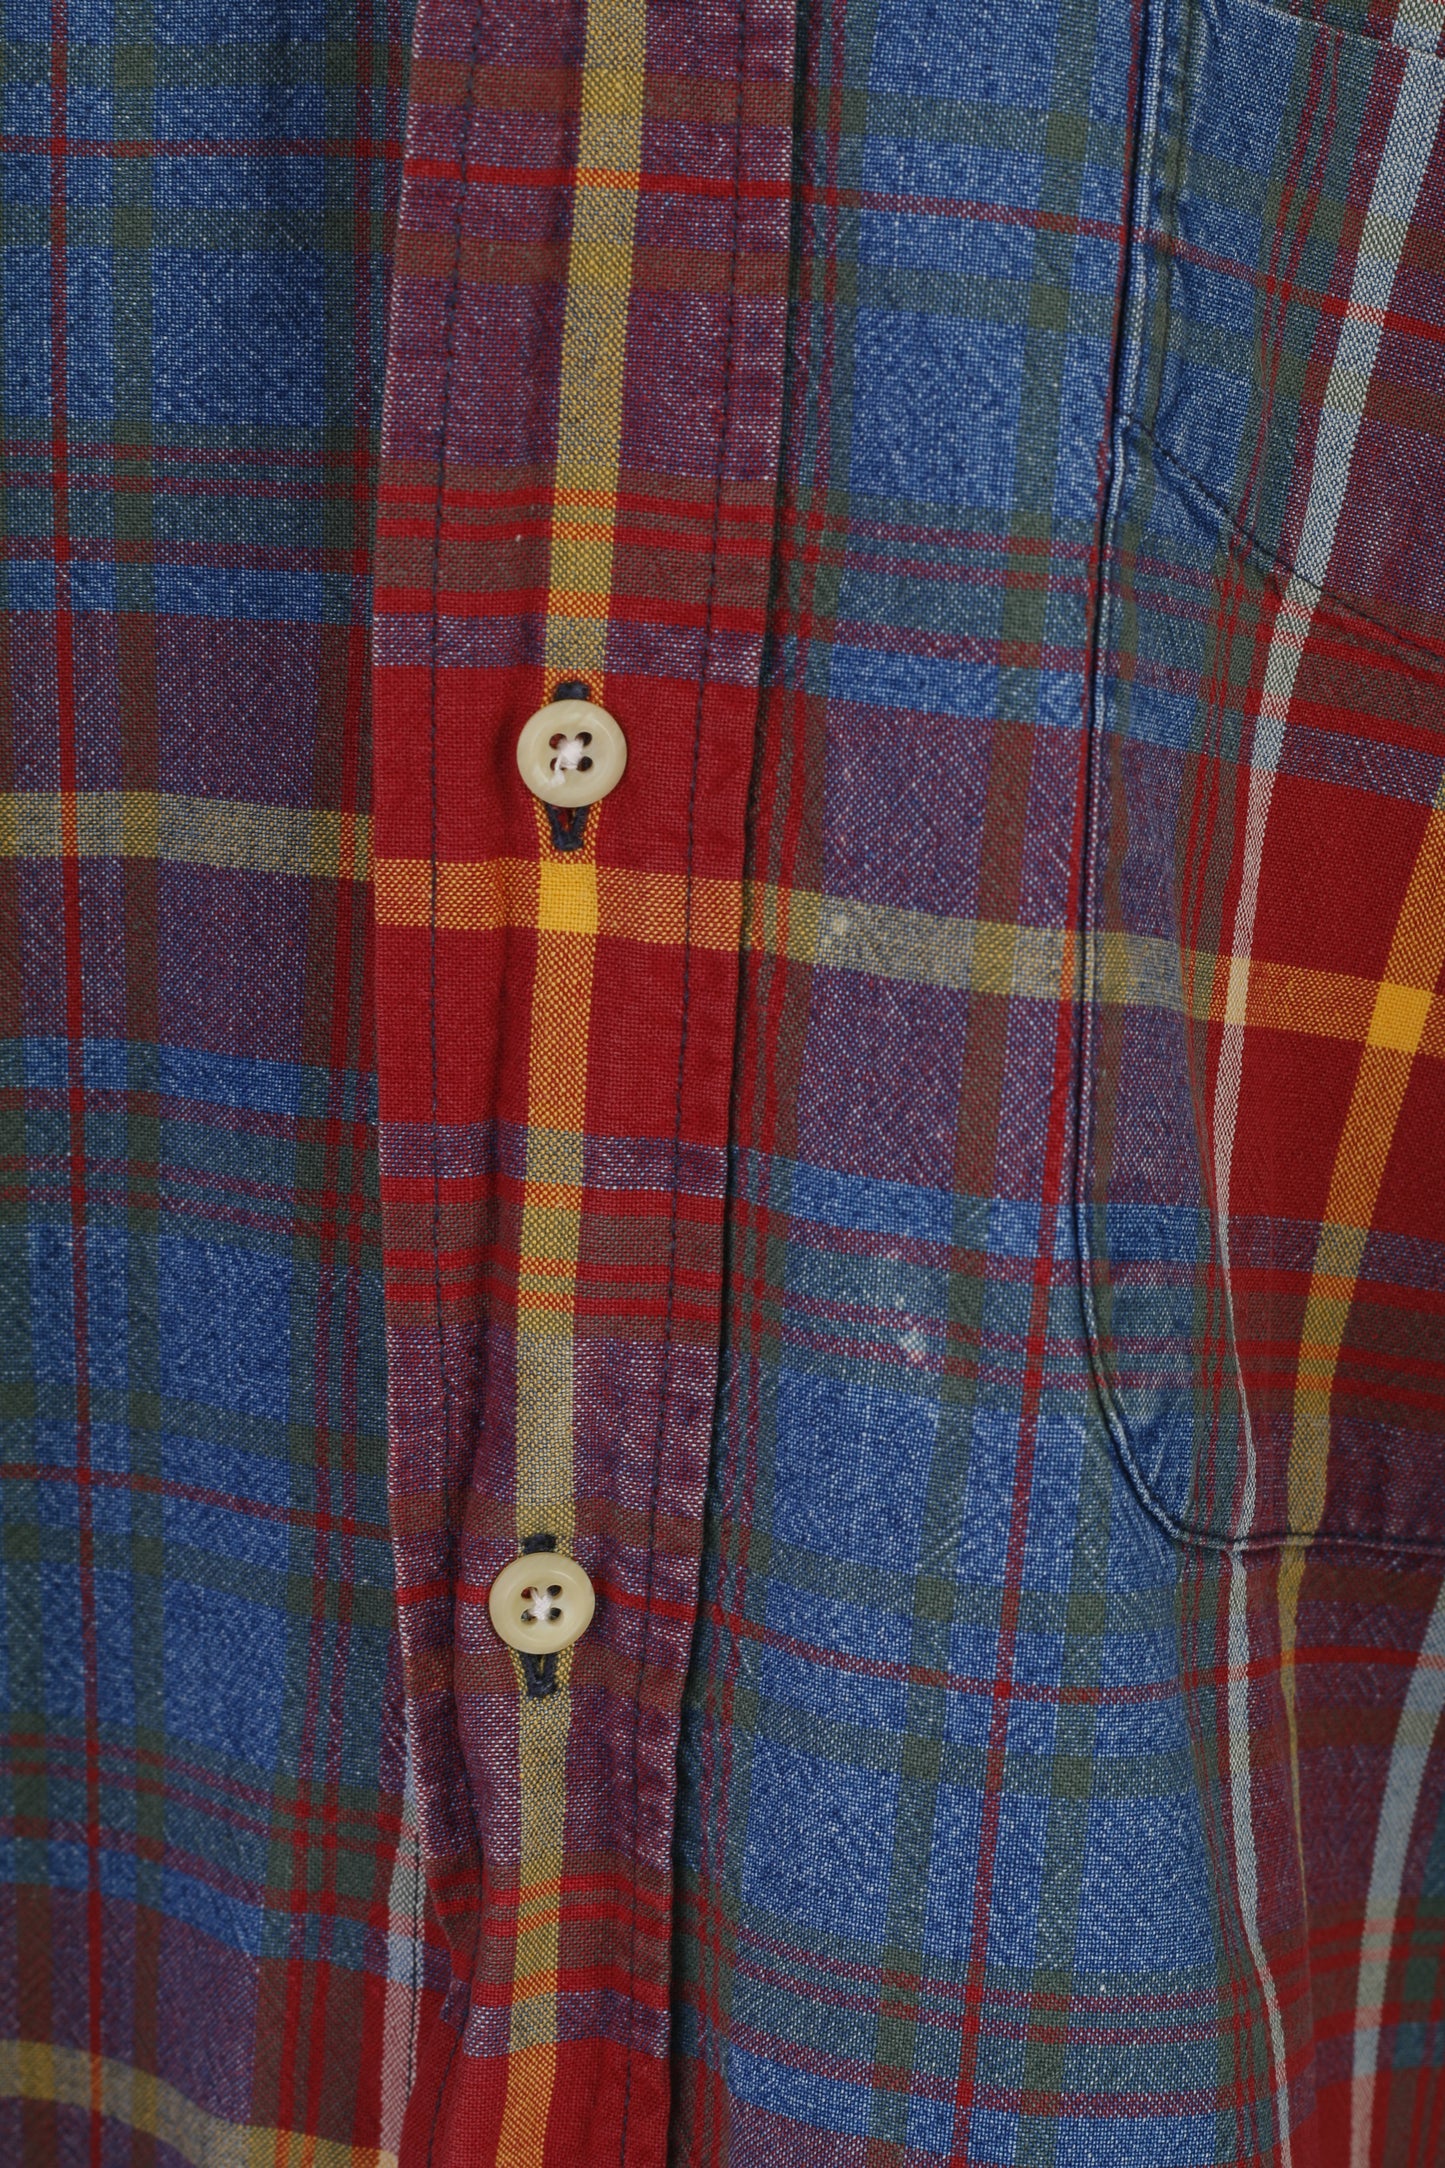 Gant Men XL Casual Shirt Red Faded Check Indigo Cotton Western Vintage Long Sleeve Top